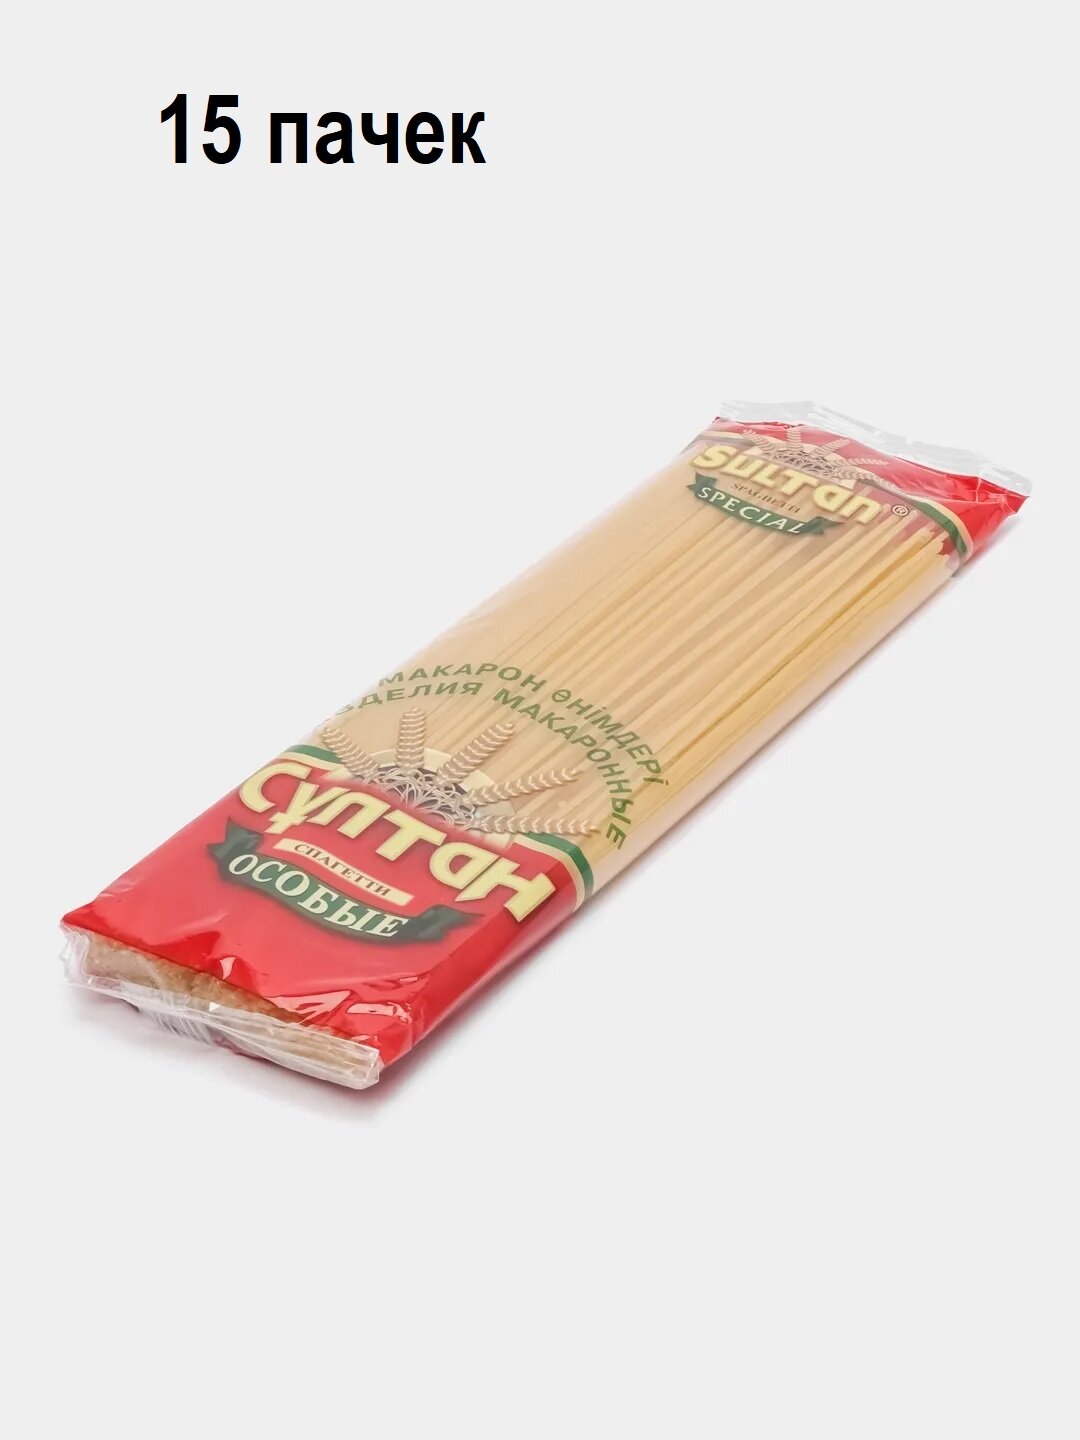 Спагетти Султан, 15 пачек по 400 грамм